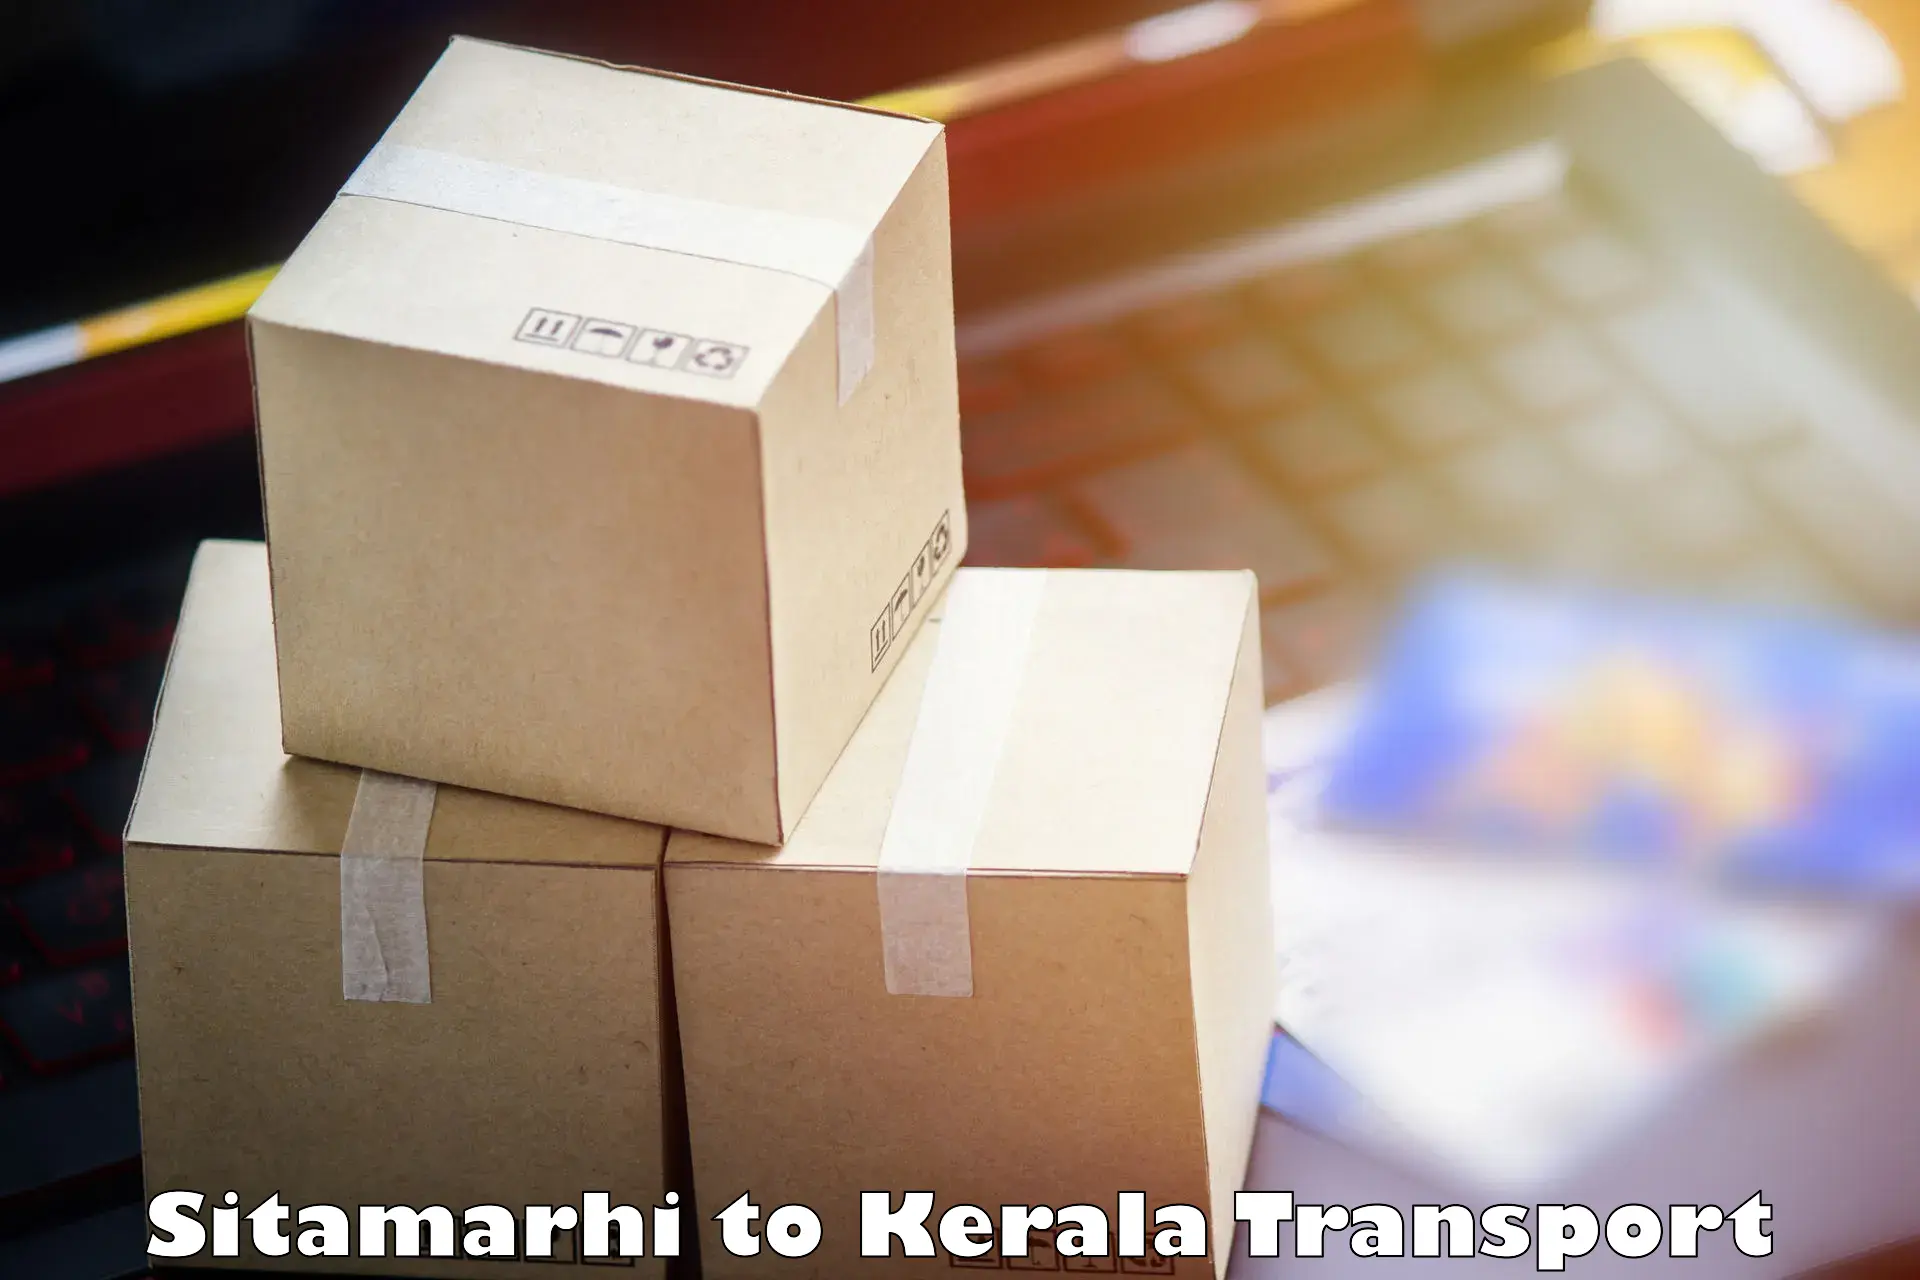 Pick up transport service Sitamarhi to Guruvayur